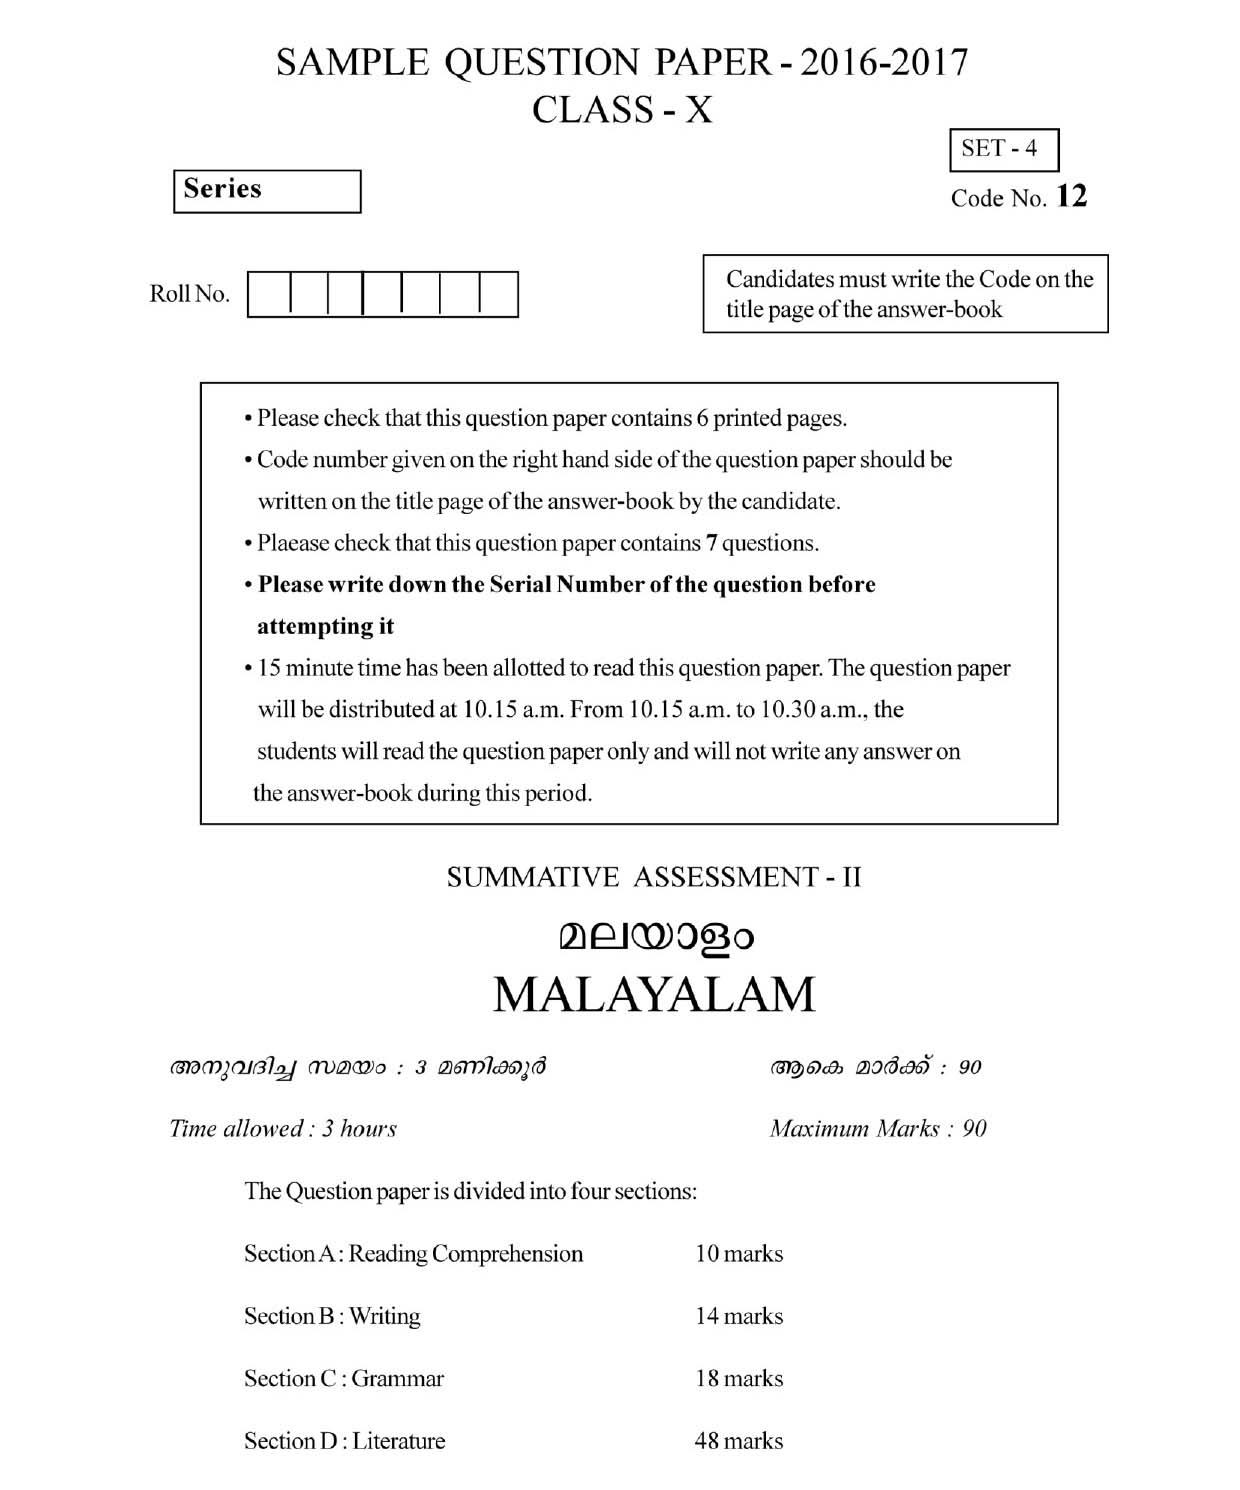 Malayalam CBSE Class X Sample Question Paper 2016 17 - Image 1